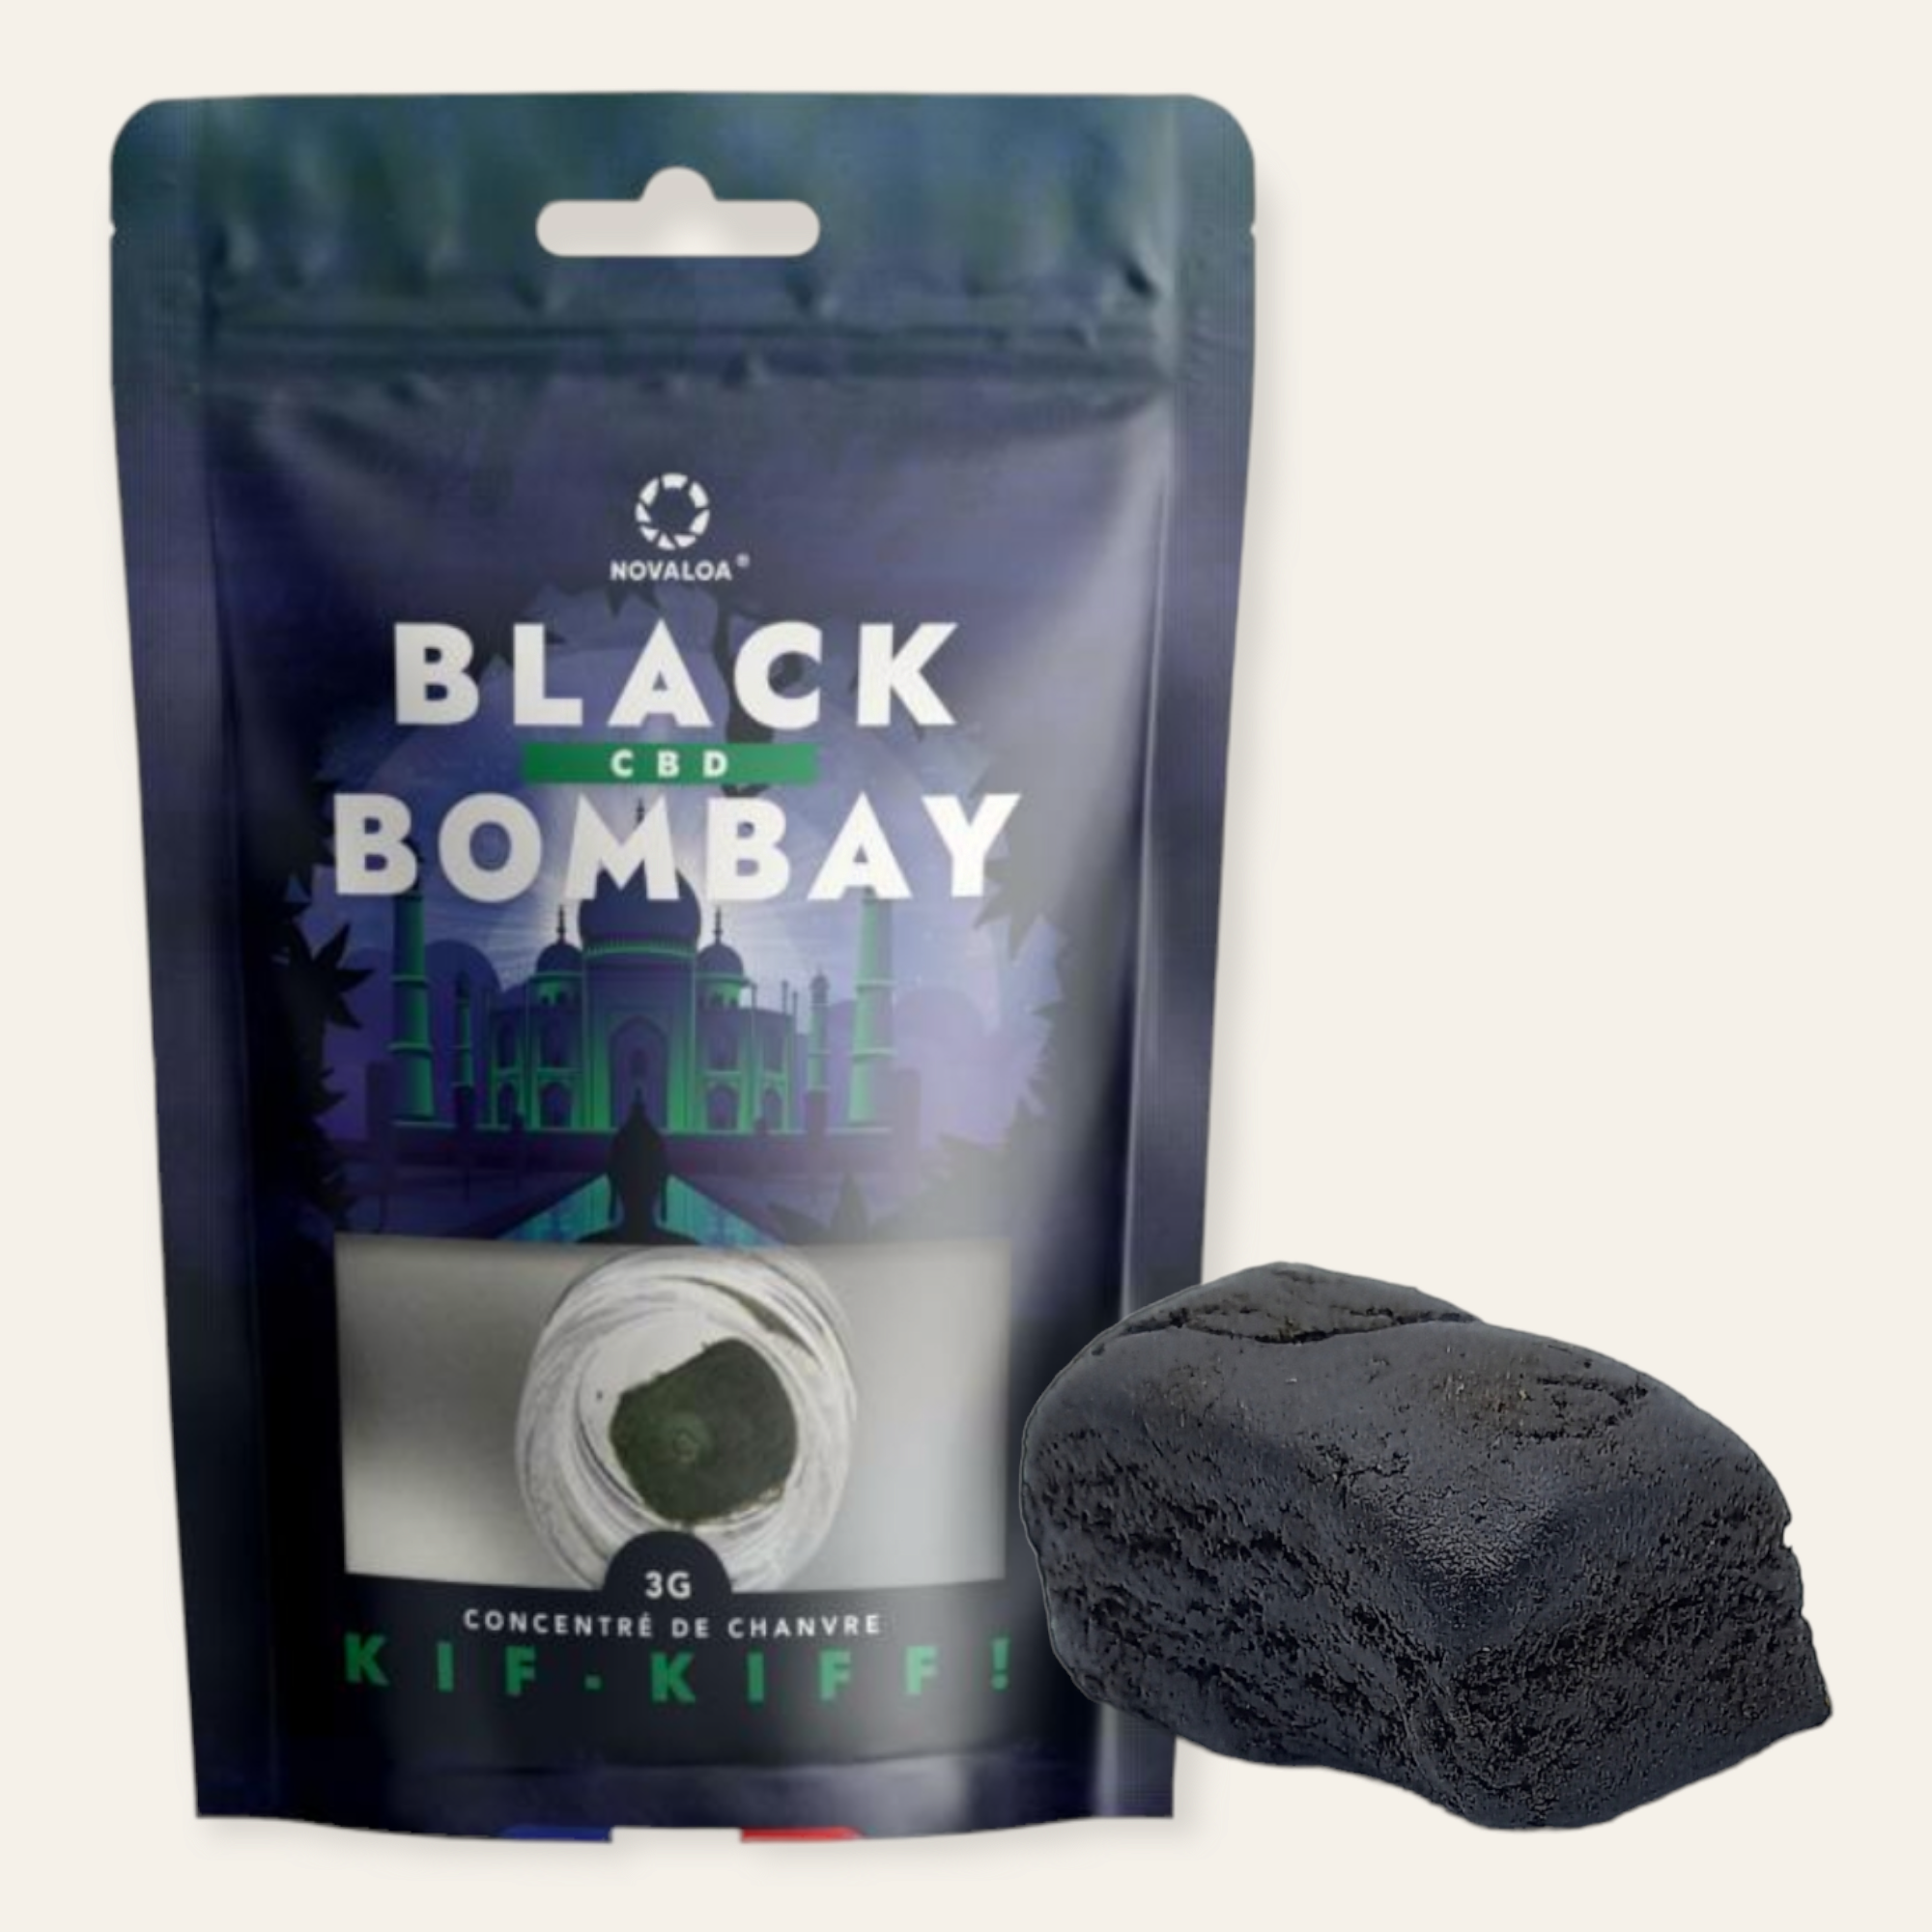 RESINE BLACK BOMBAY CBD